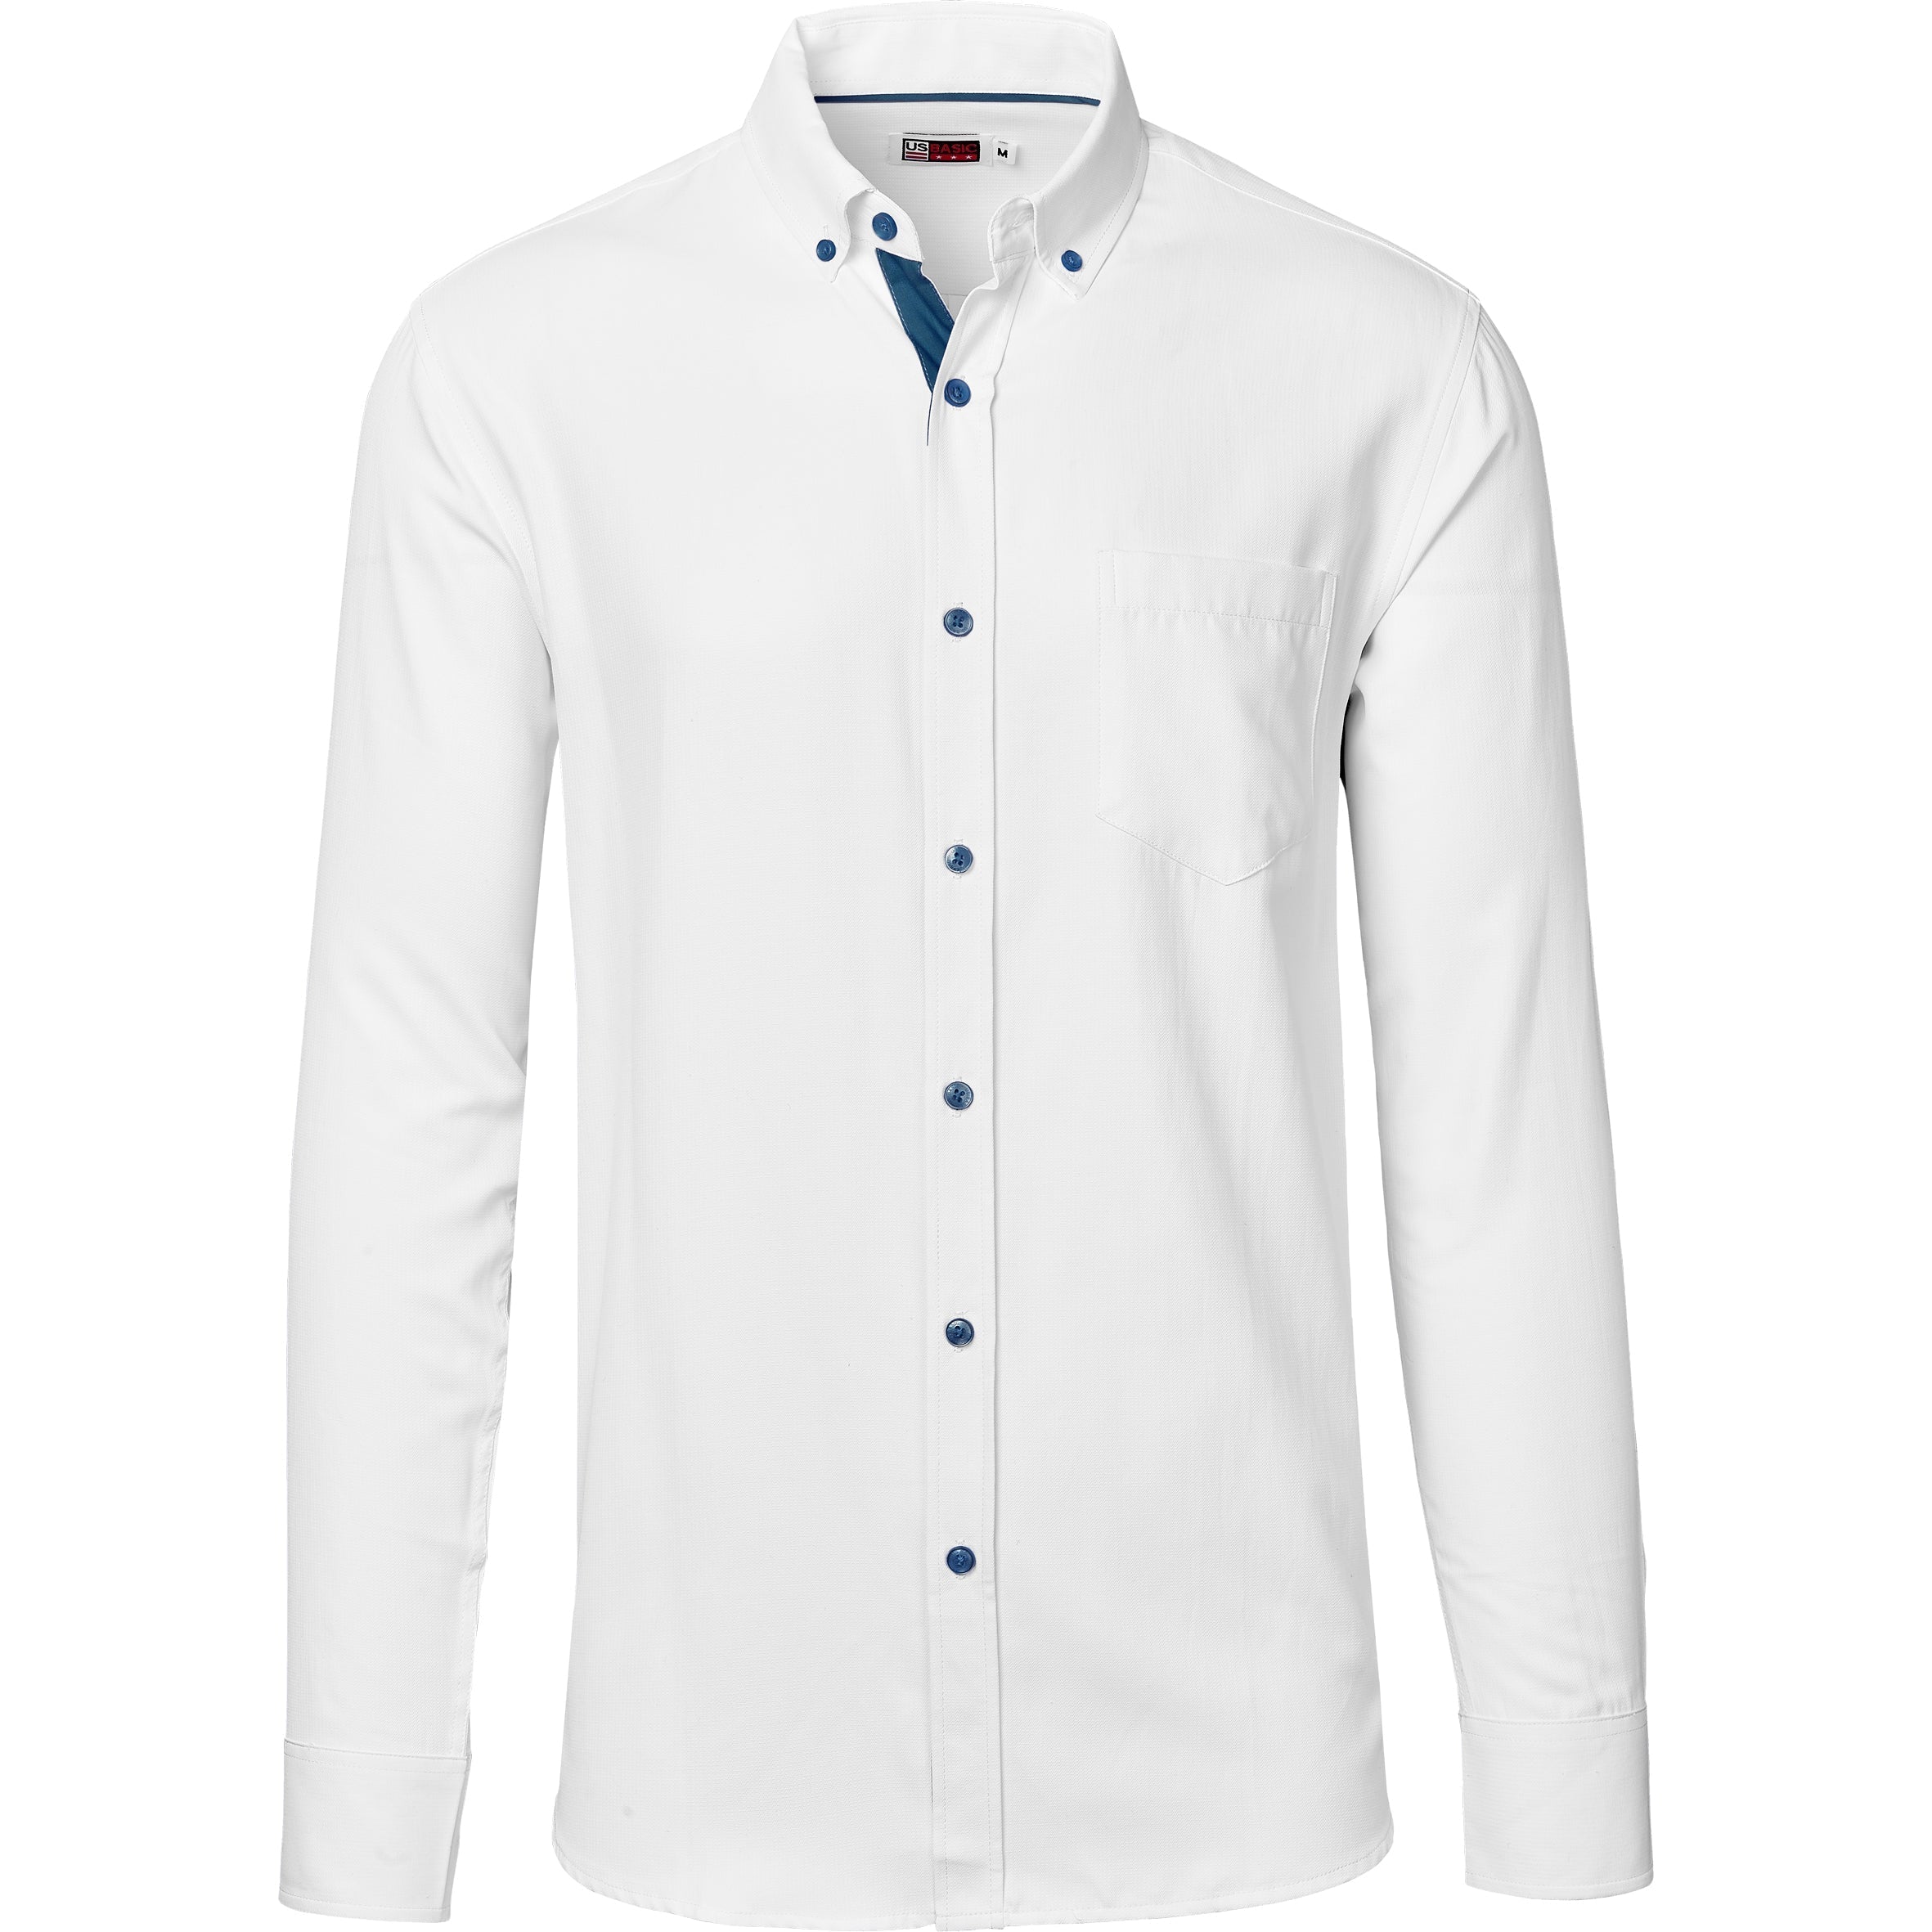 Mens Long Sleeve Casablanca Shirt - Navy Only-L-Navy-N